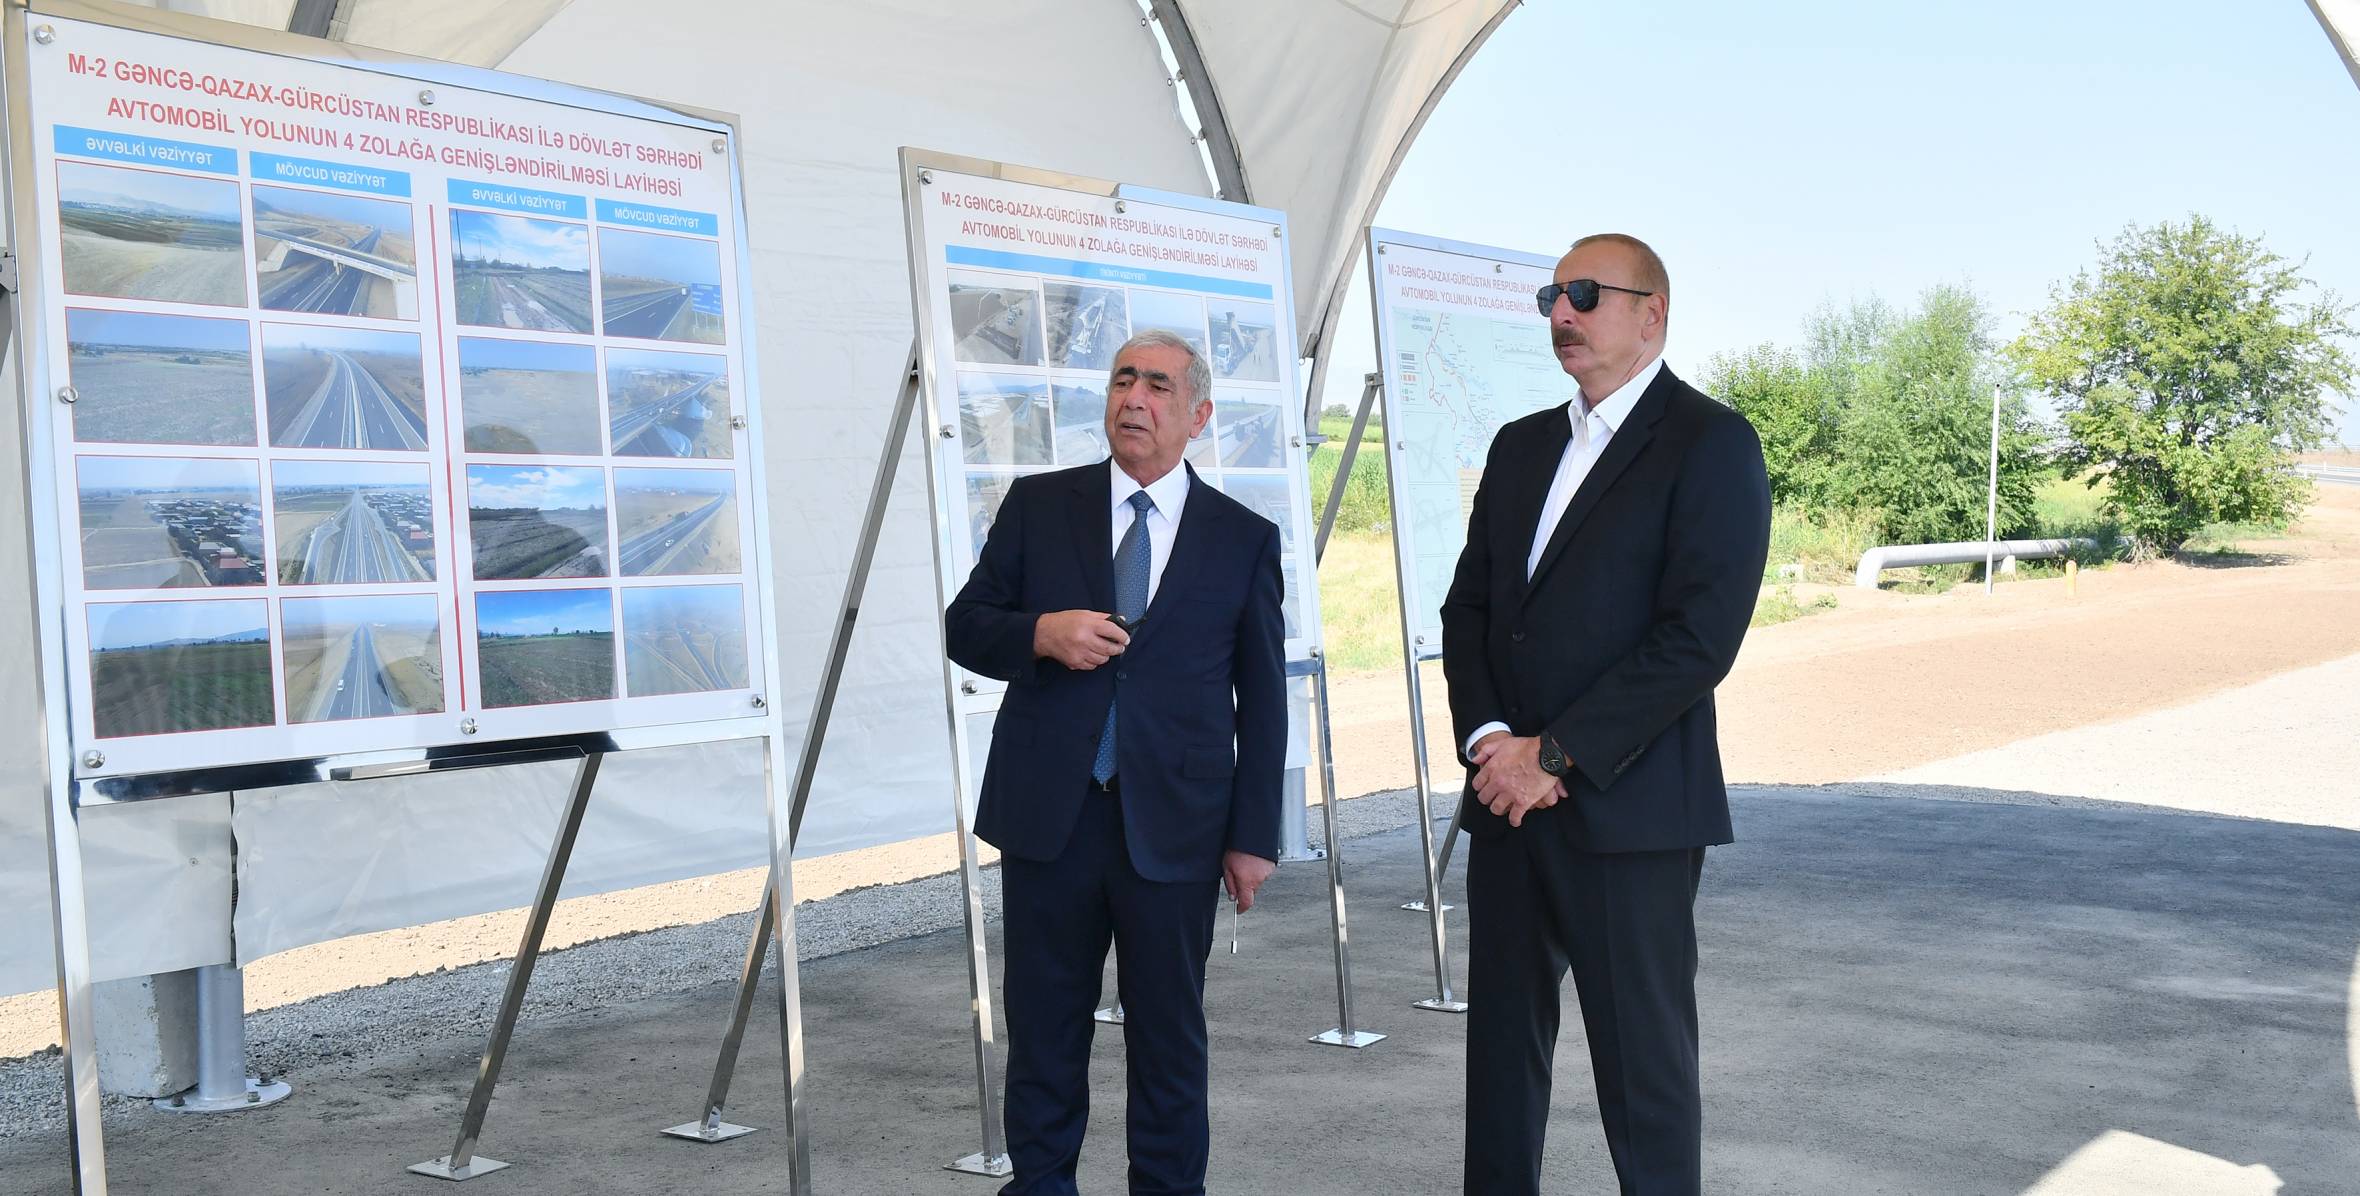 Ilham Aliyev participated in opening of Ganja-Gazakhbeyli section of Baku-Gazakh-Georgia state border highway